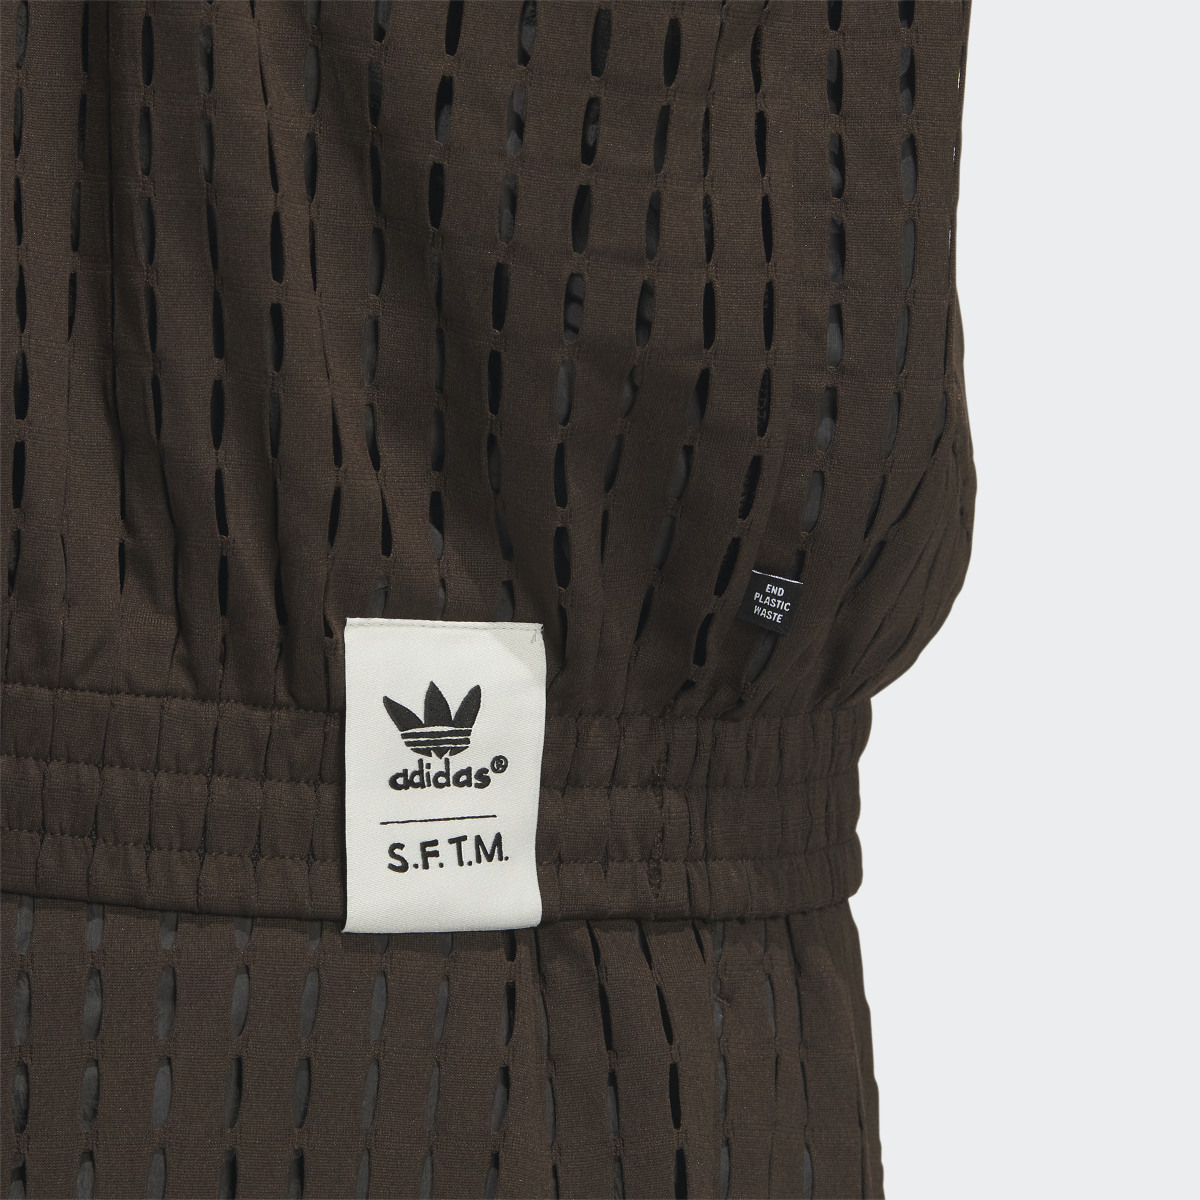 Adidas SFTM Jacket (Gender Neutral). 6